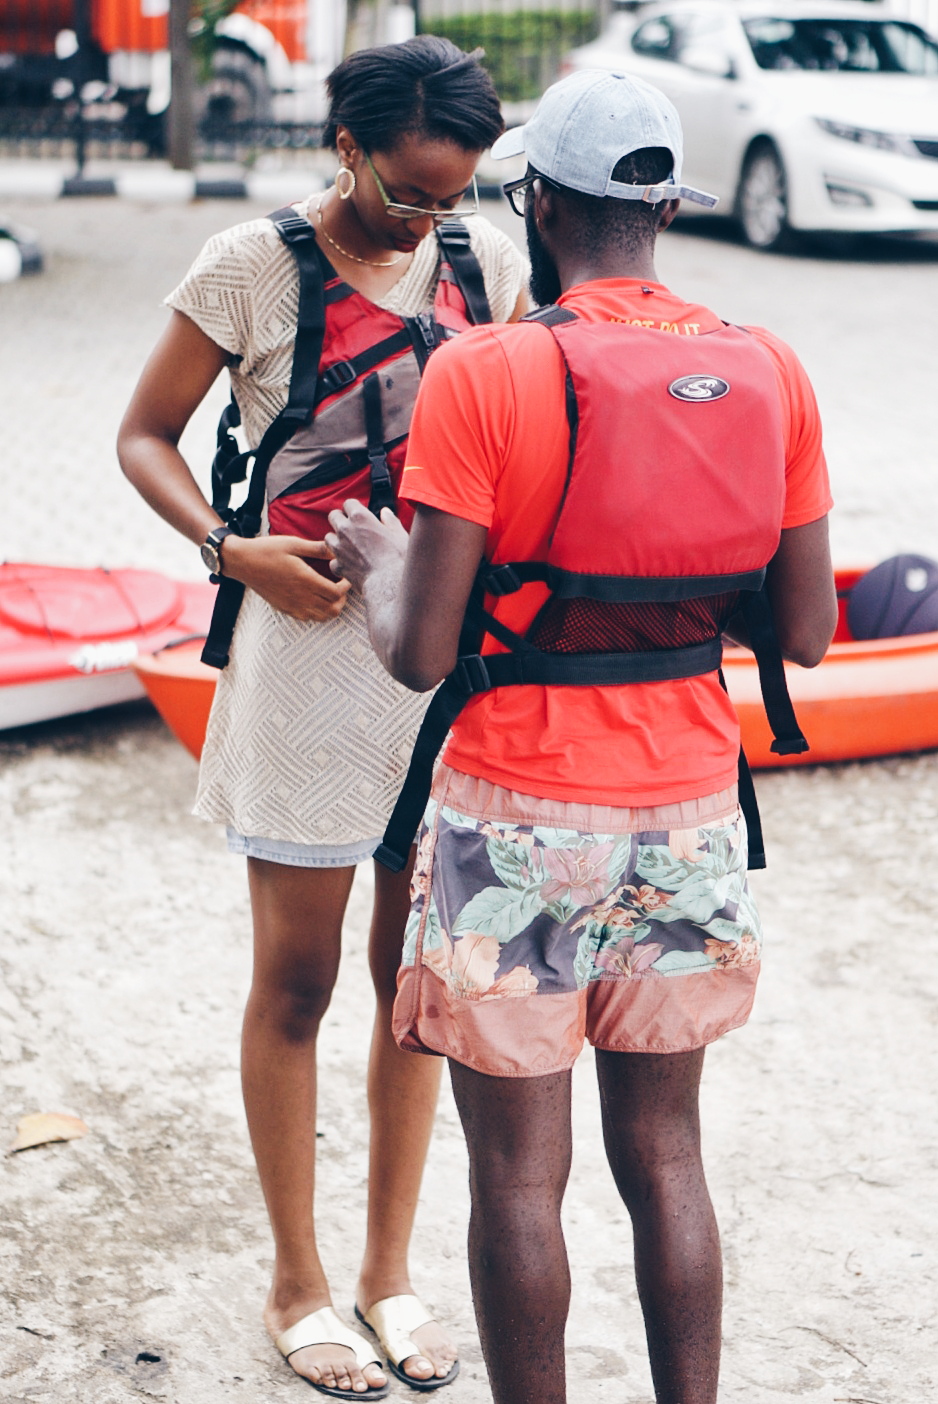 Cassie daves kayaking in Lagos - things to do in lagos